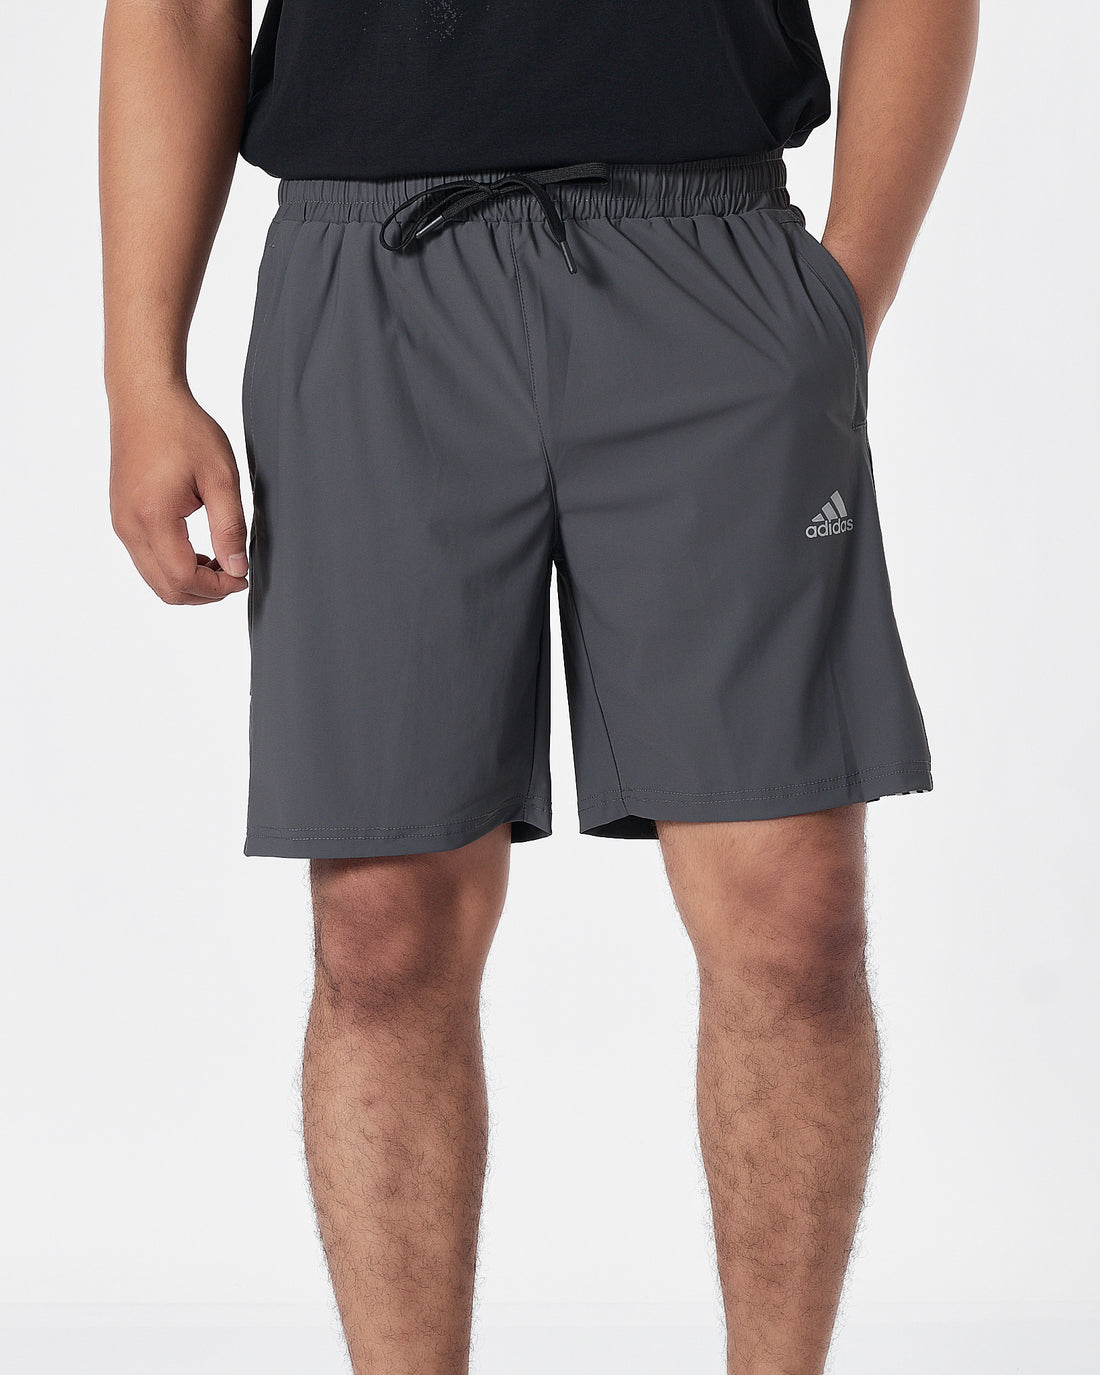 ADI Logo Printed Men Grey Track Shorts 13.50